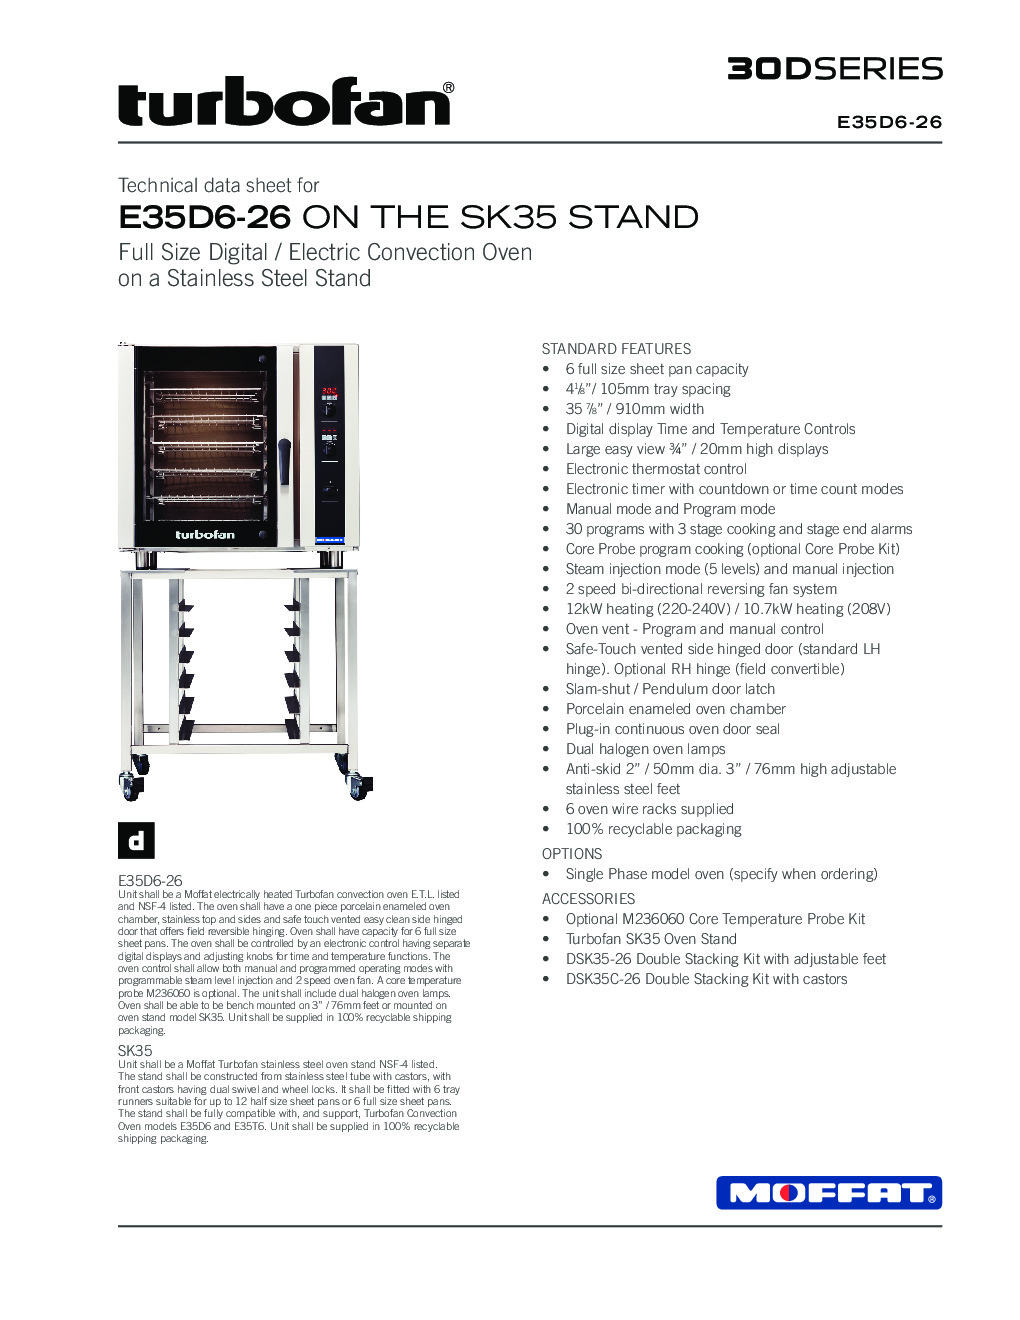 Moffat E35D6-26/SK35 Electric Convection Oven